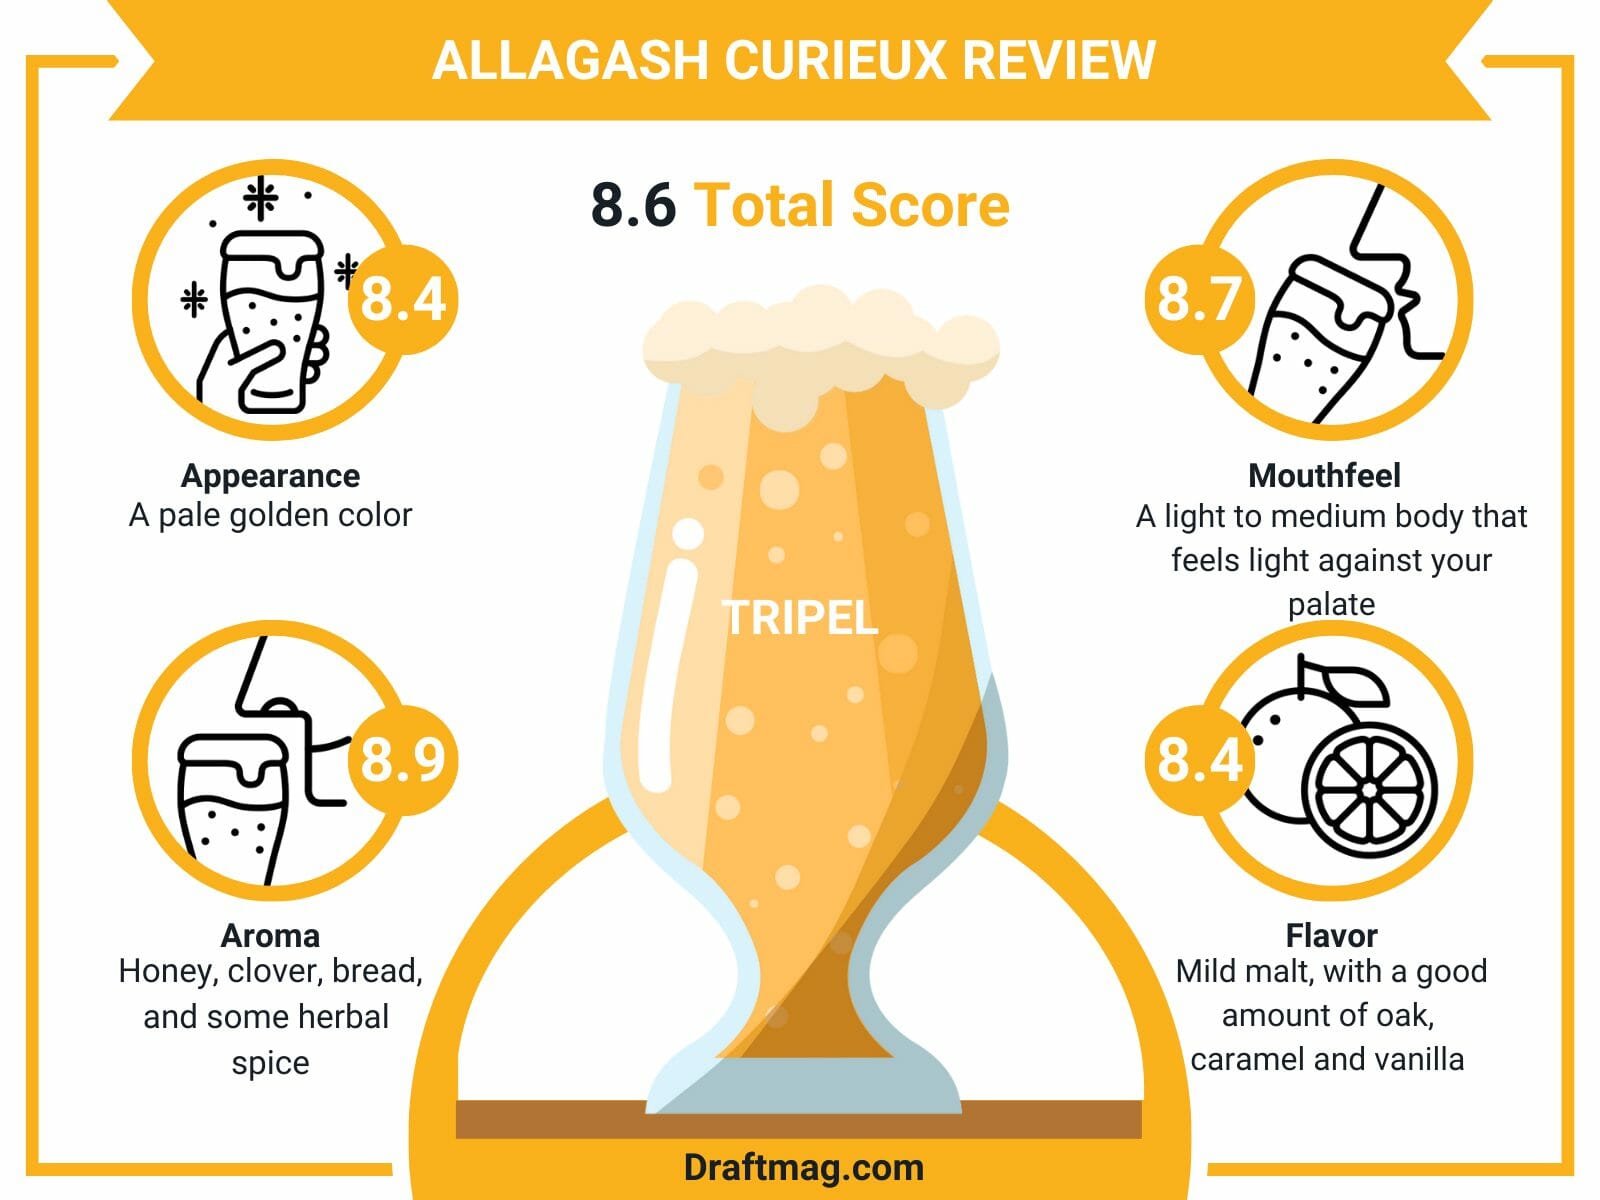 Allagash curieux review infographic